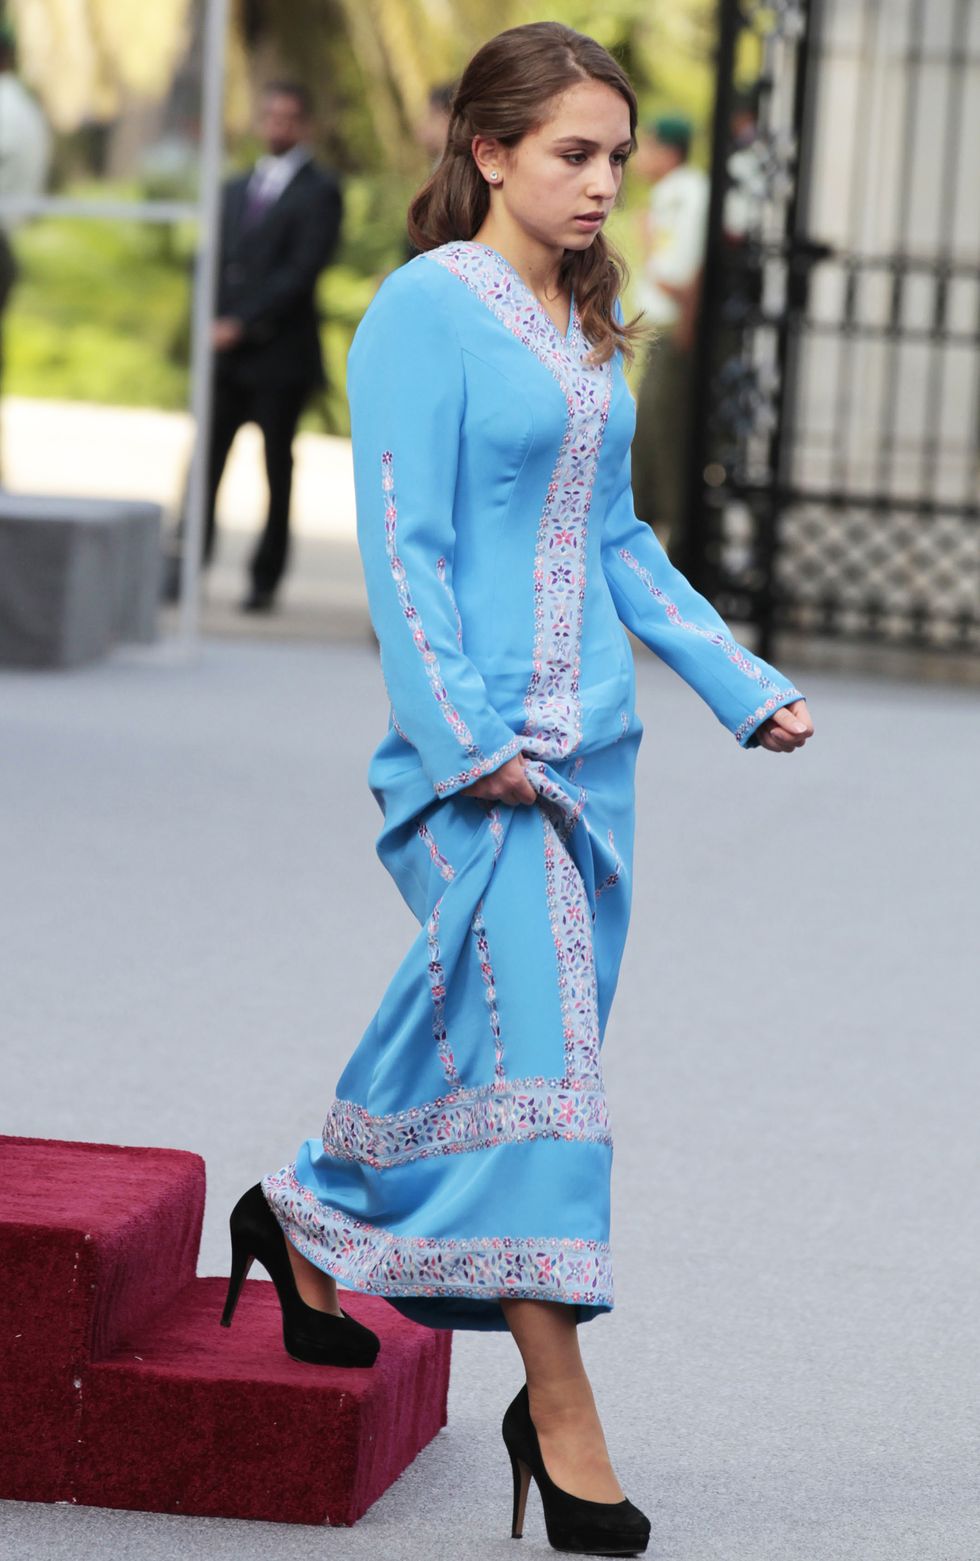 Princess Iman, daughter of King Abdullah